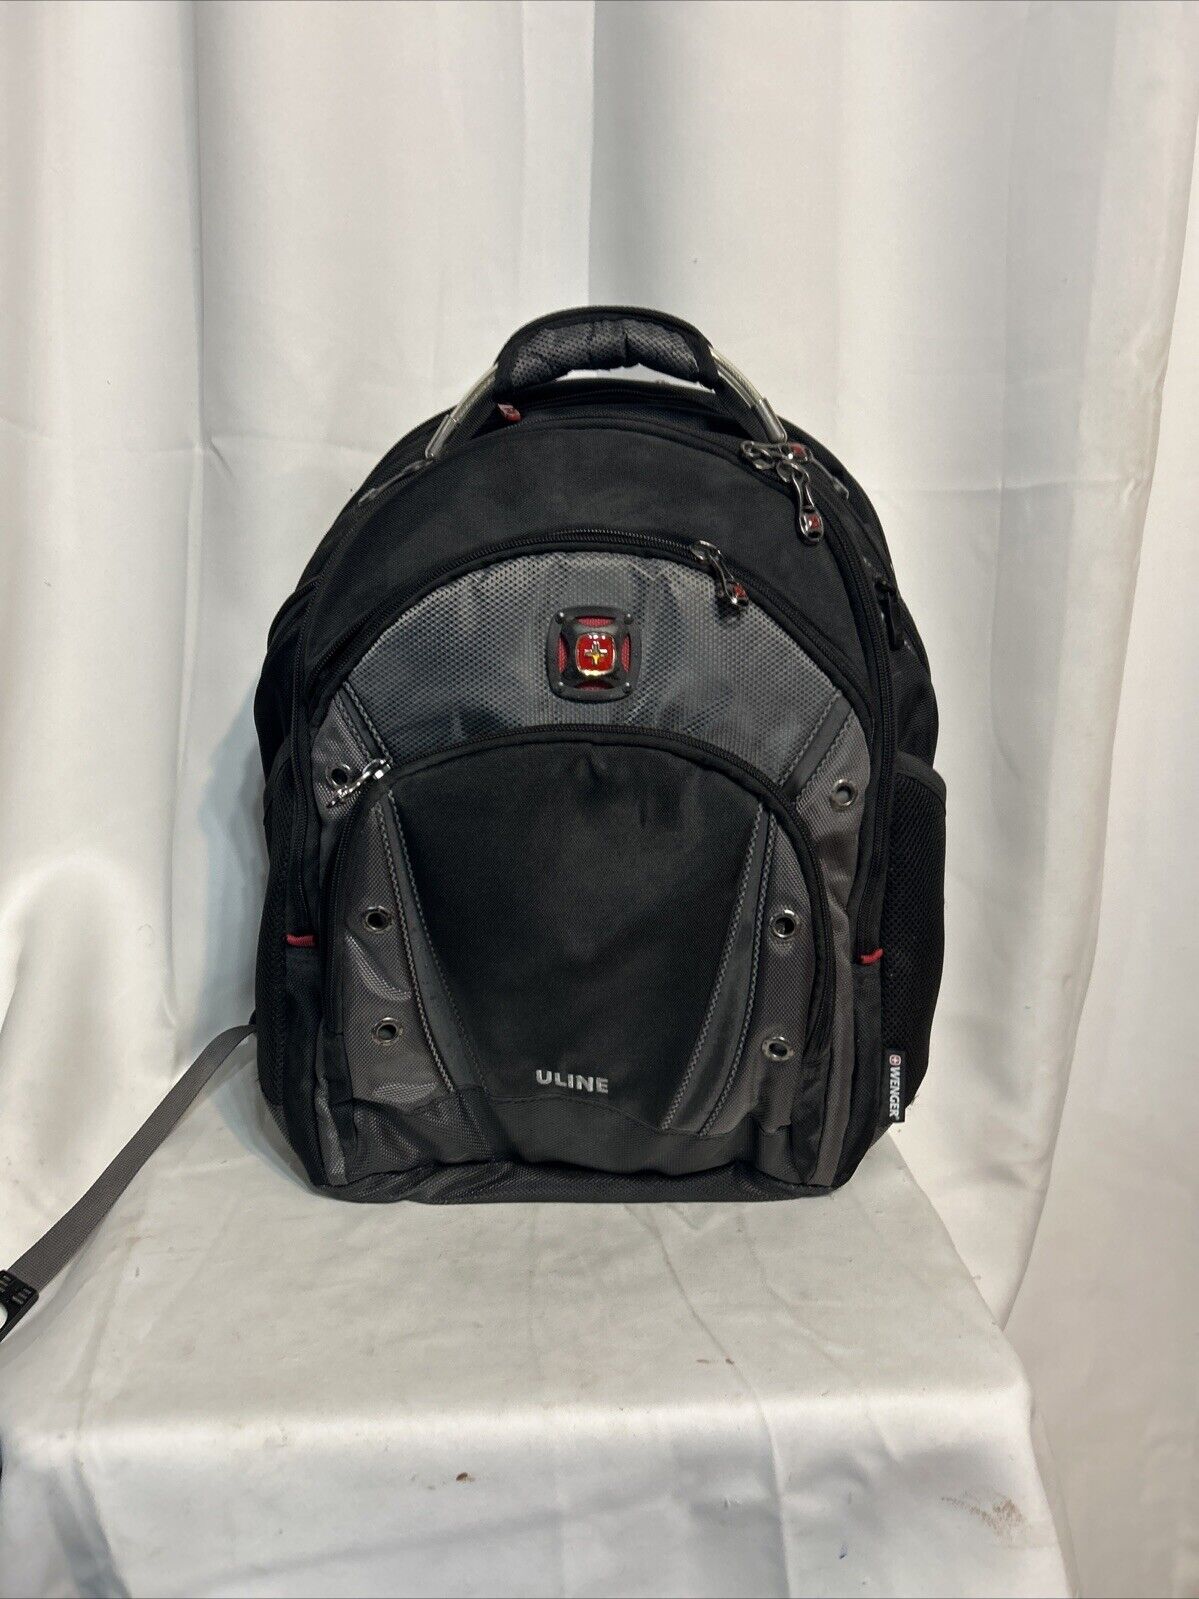 Wenger SwissGear ULINE Synergy 16 Inch Laptop Backpack. Black/Gray, NEW. 